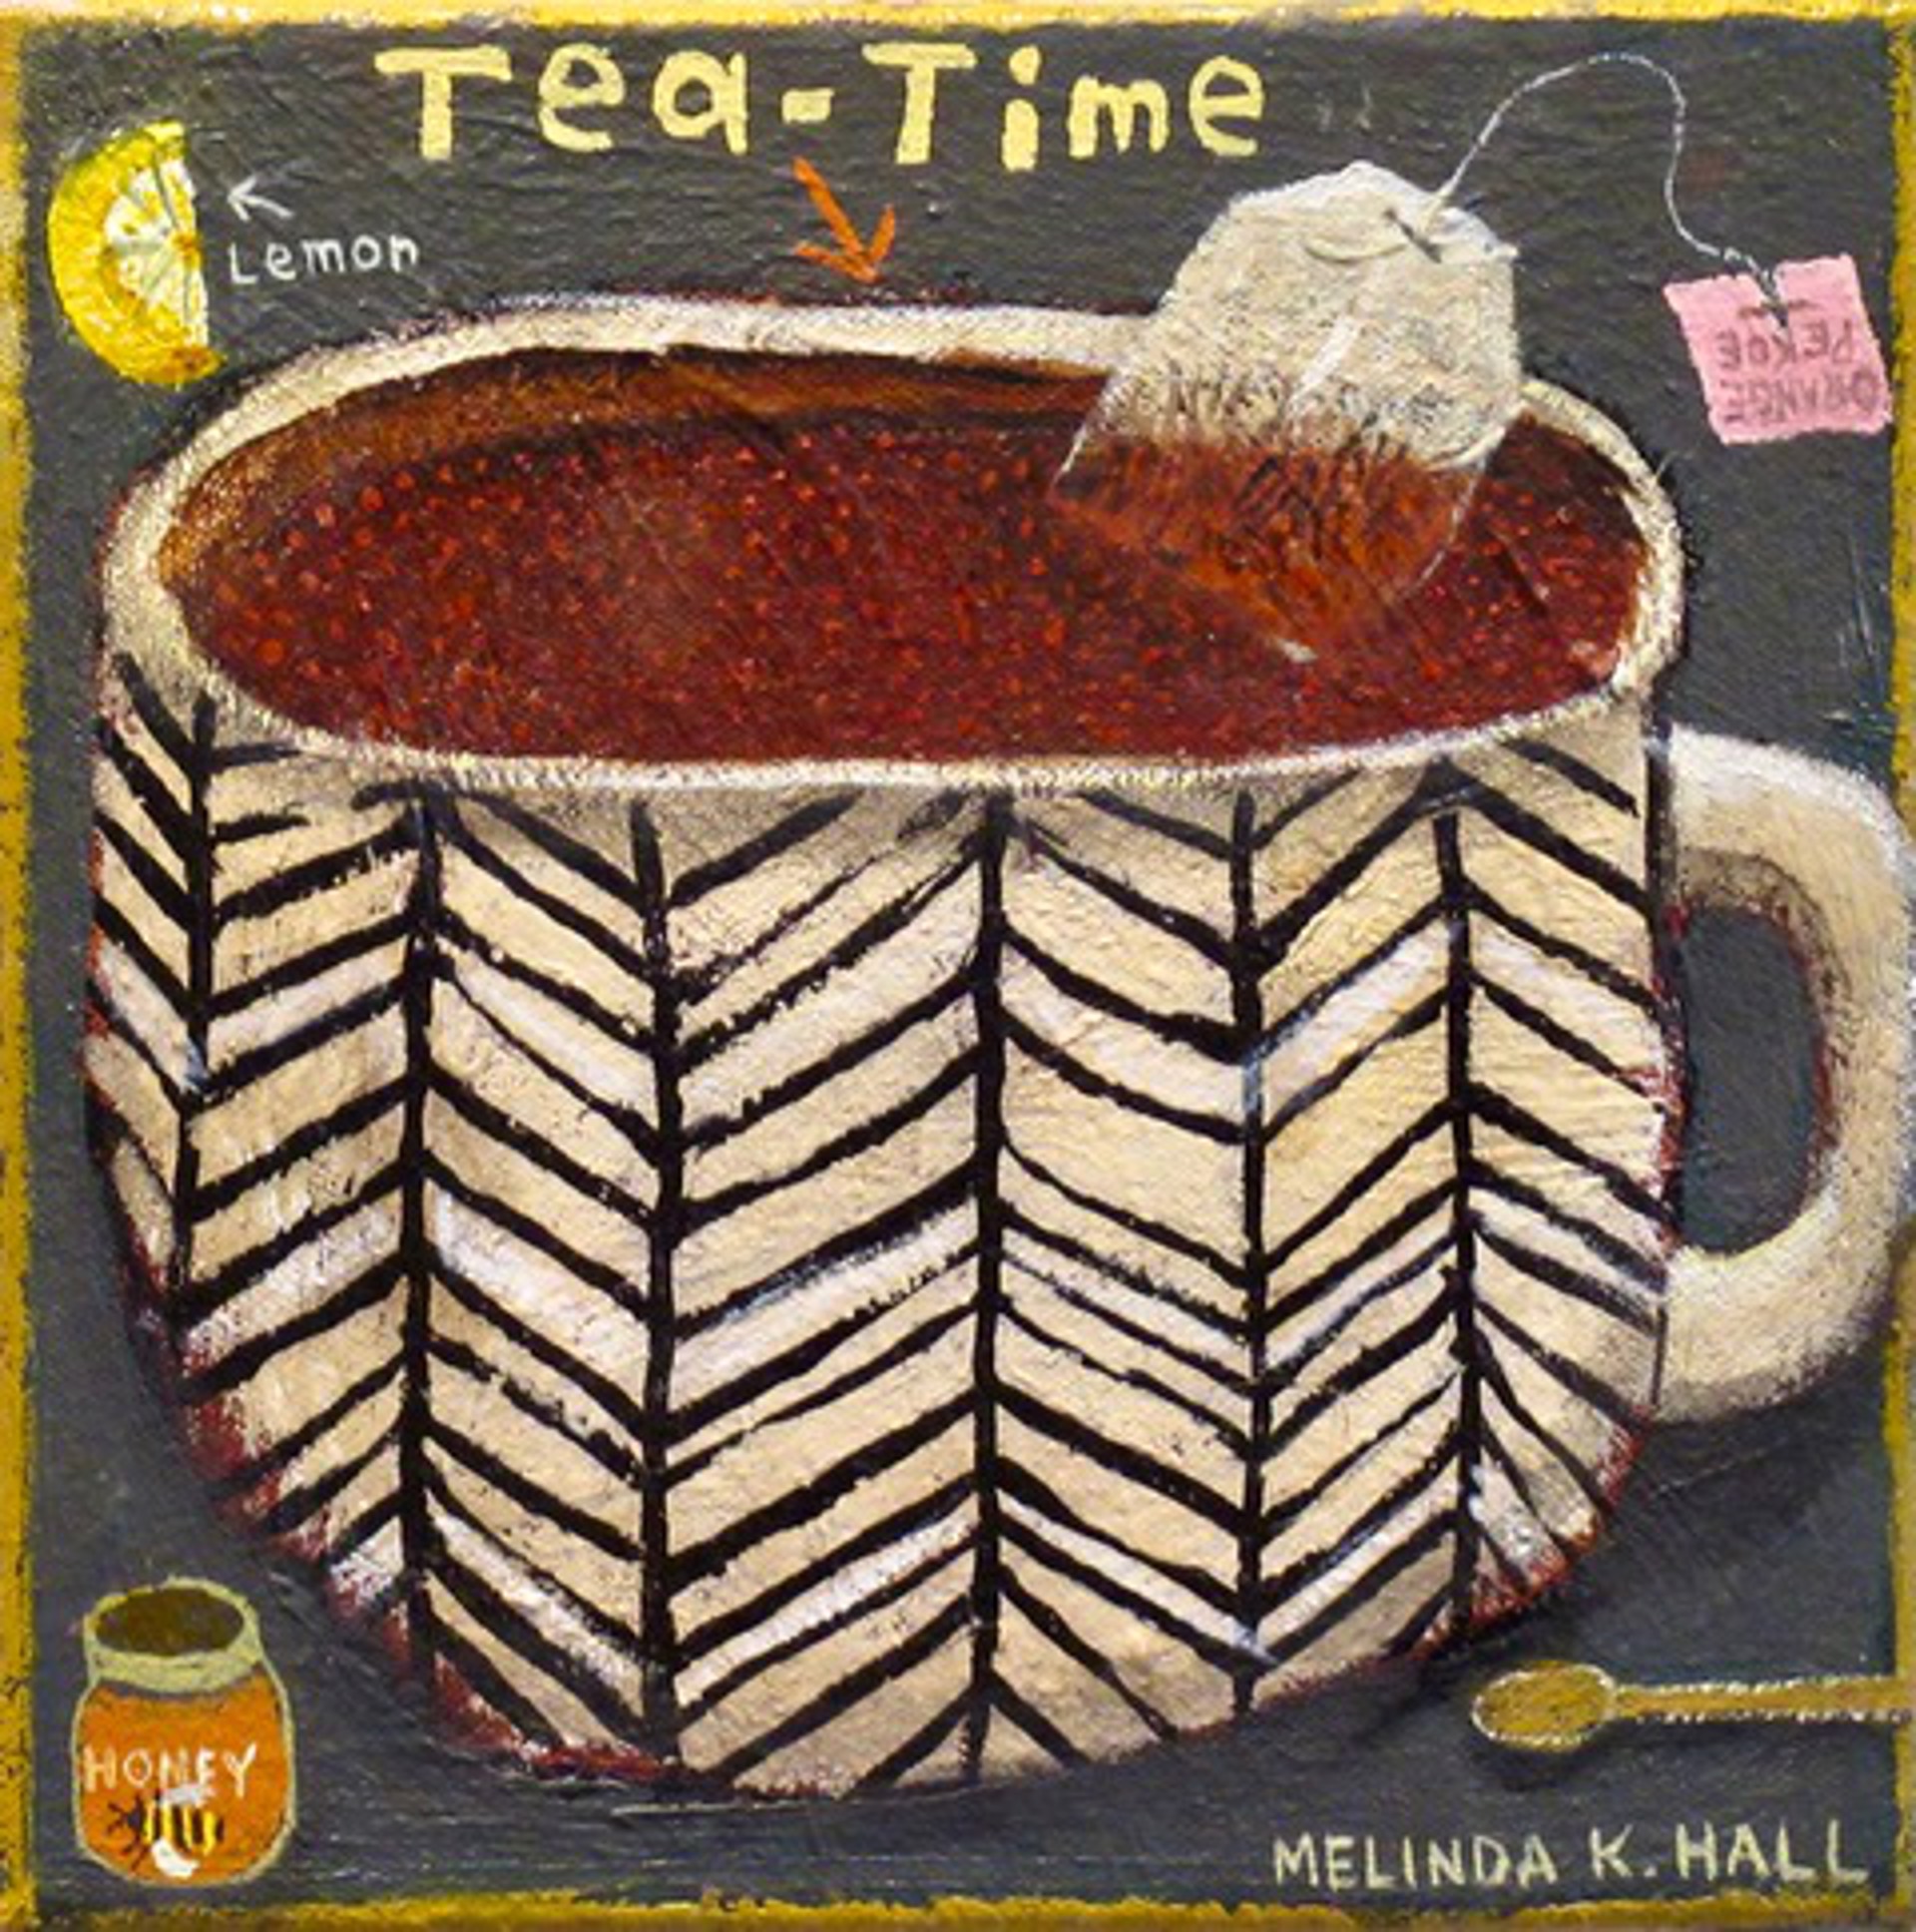 Tea-time by Melinda K. Hall